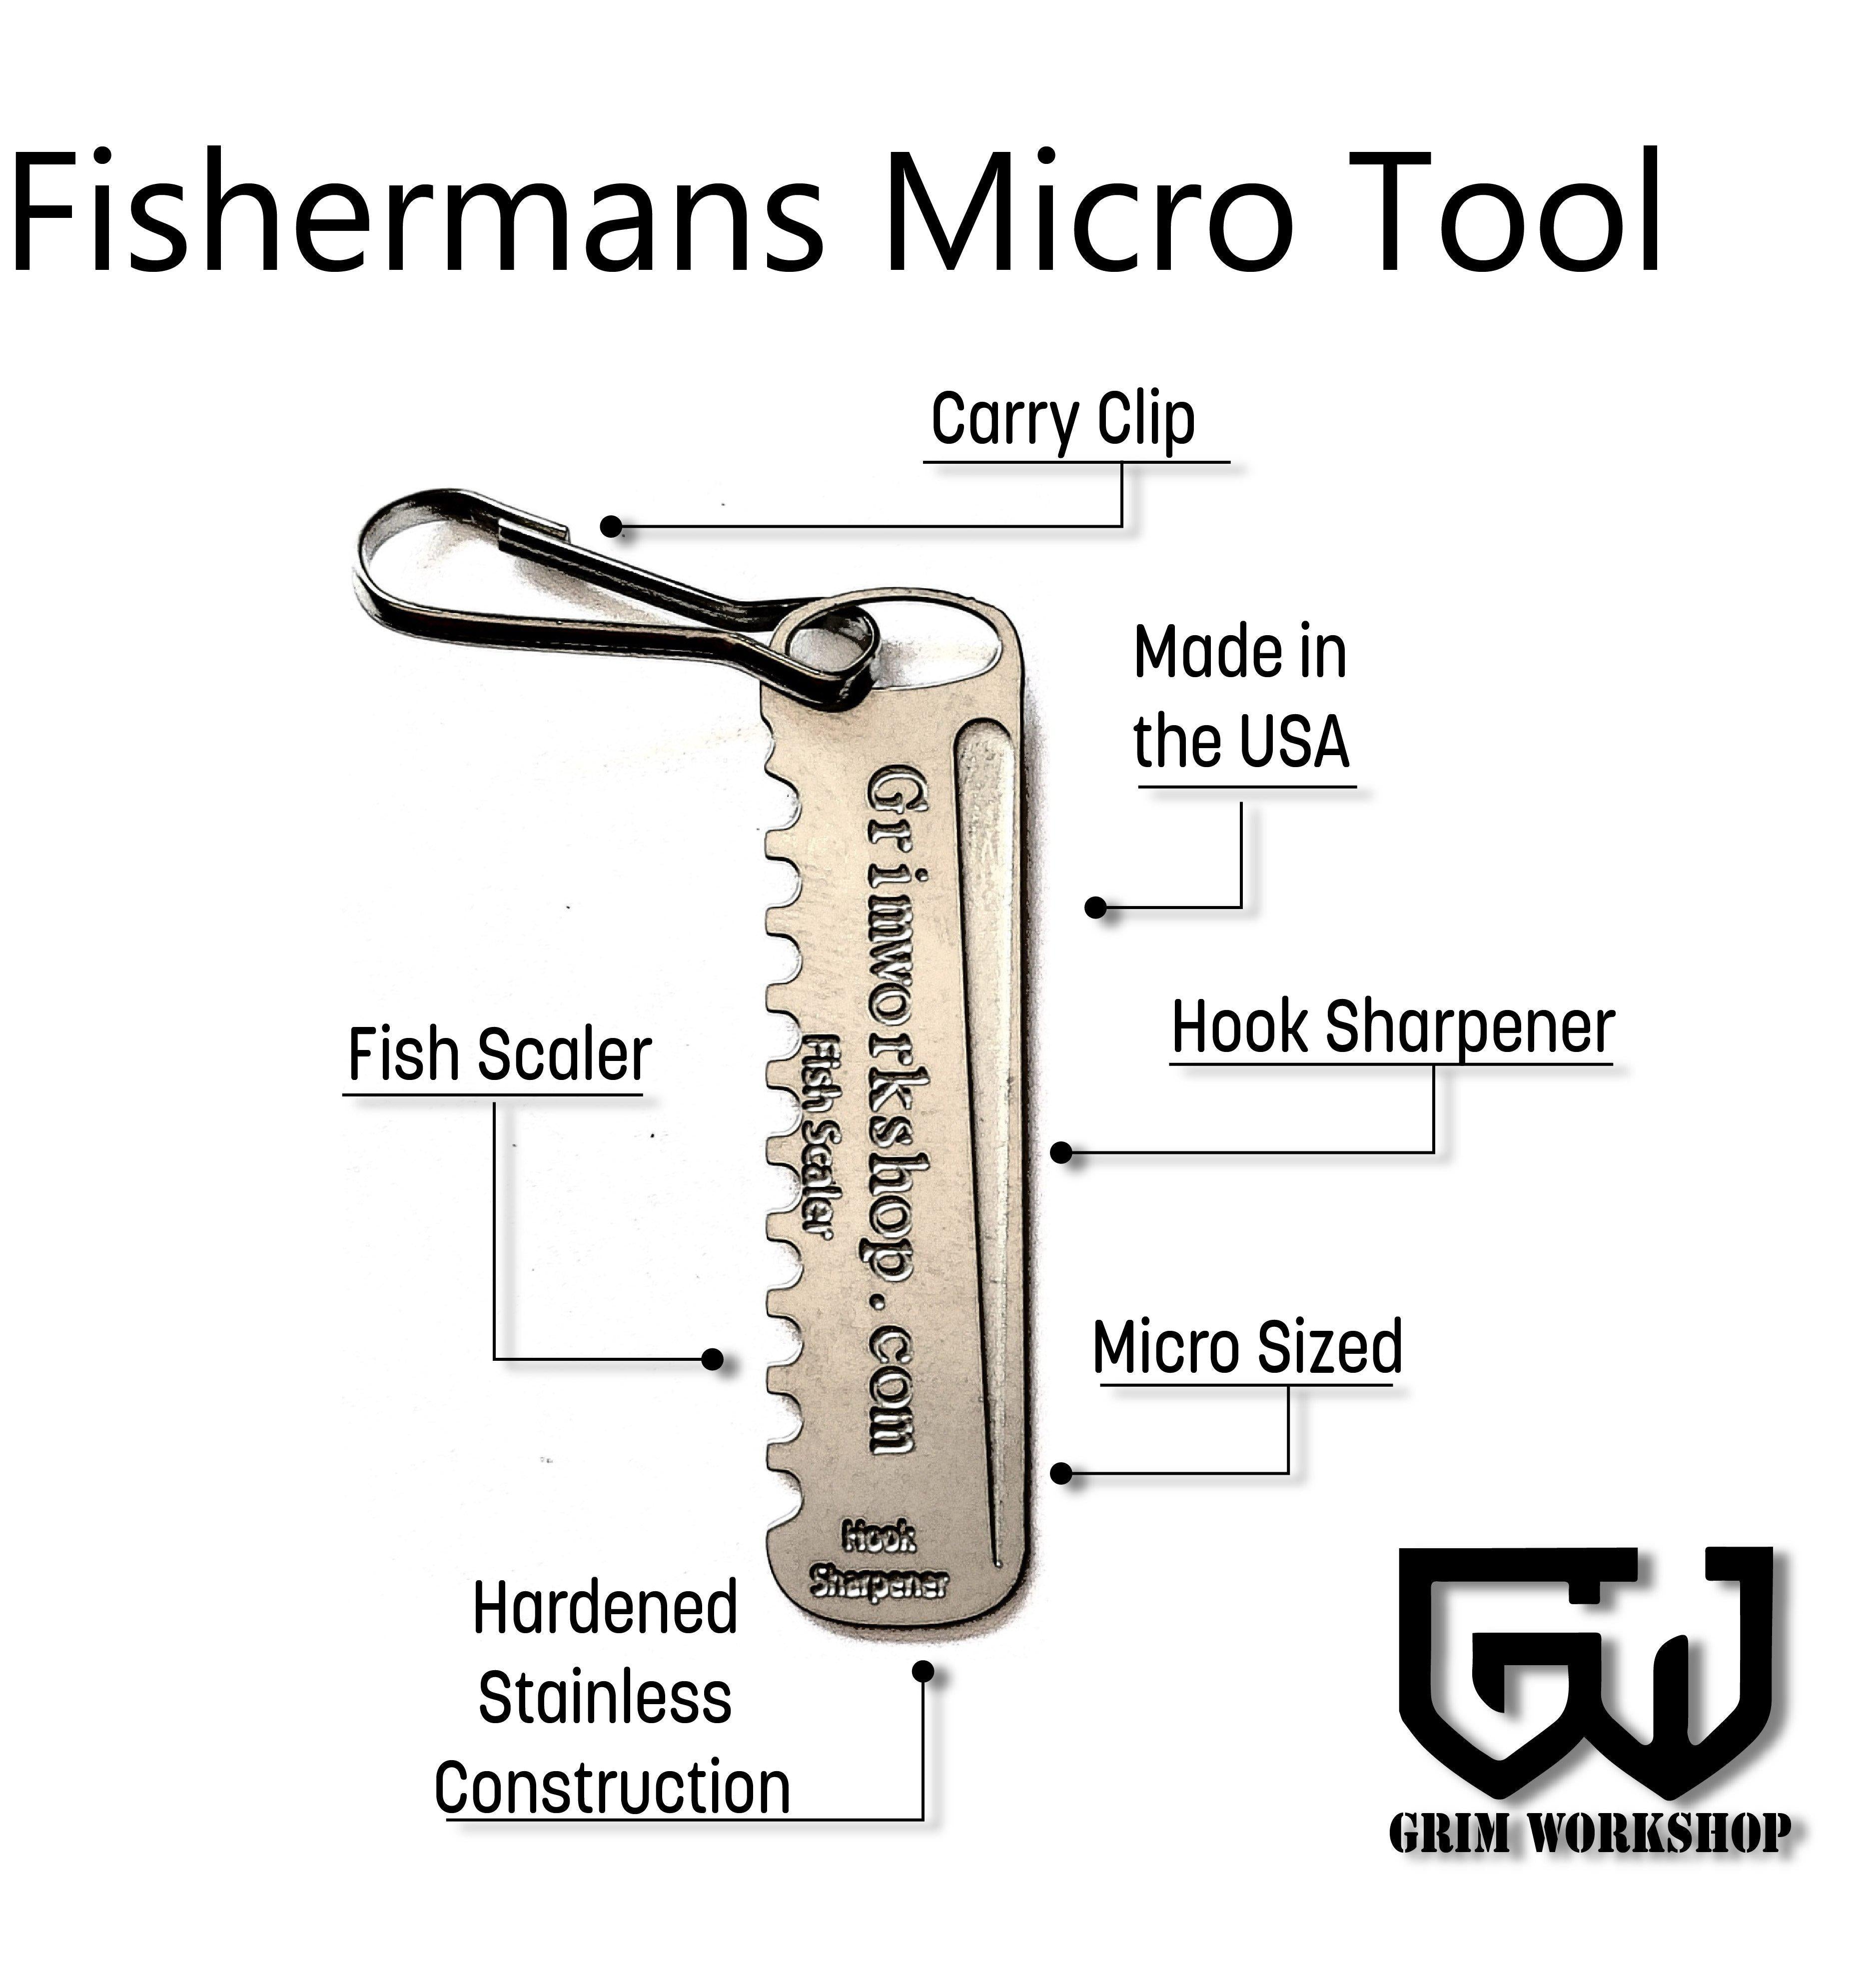 Fisherman's Micro Multi Tool-Grimworkshop-bugoutbag-bushcraft-edc-gear-edctool-everydaycarry-survivalcard-survivalkit-wilderness-prepping-toolkit